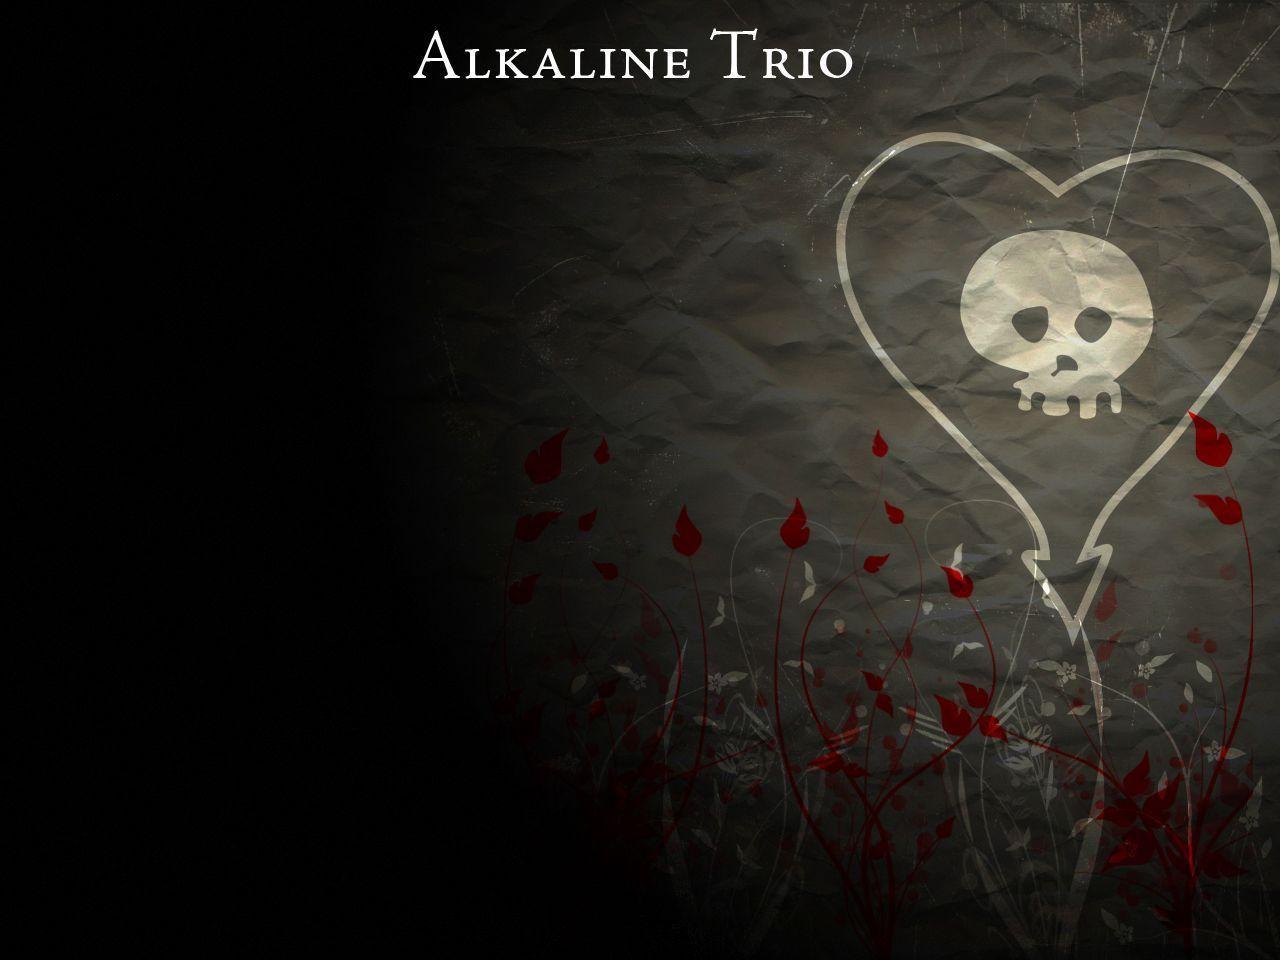 Alkaline Trio Wallpaper, Alkaline Trio Band Wallpaper And Desktop